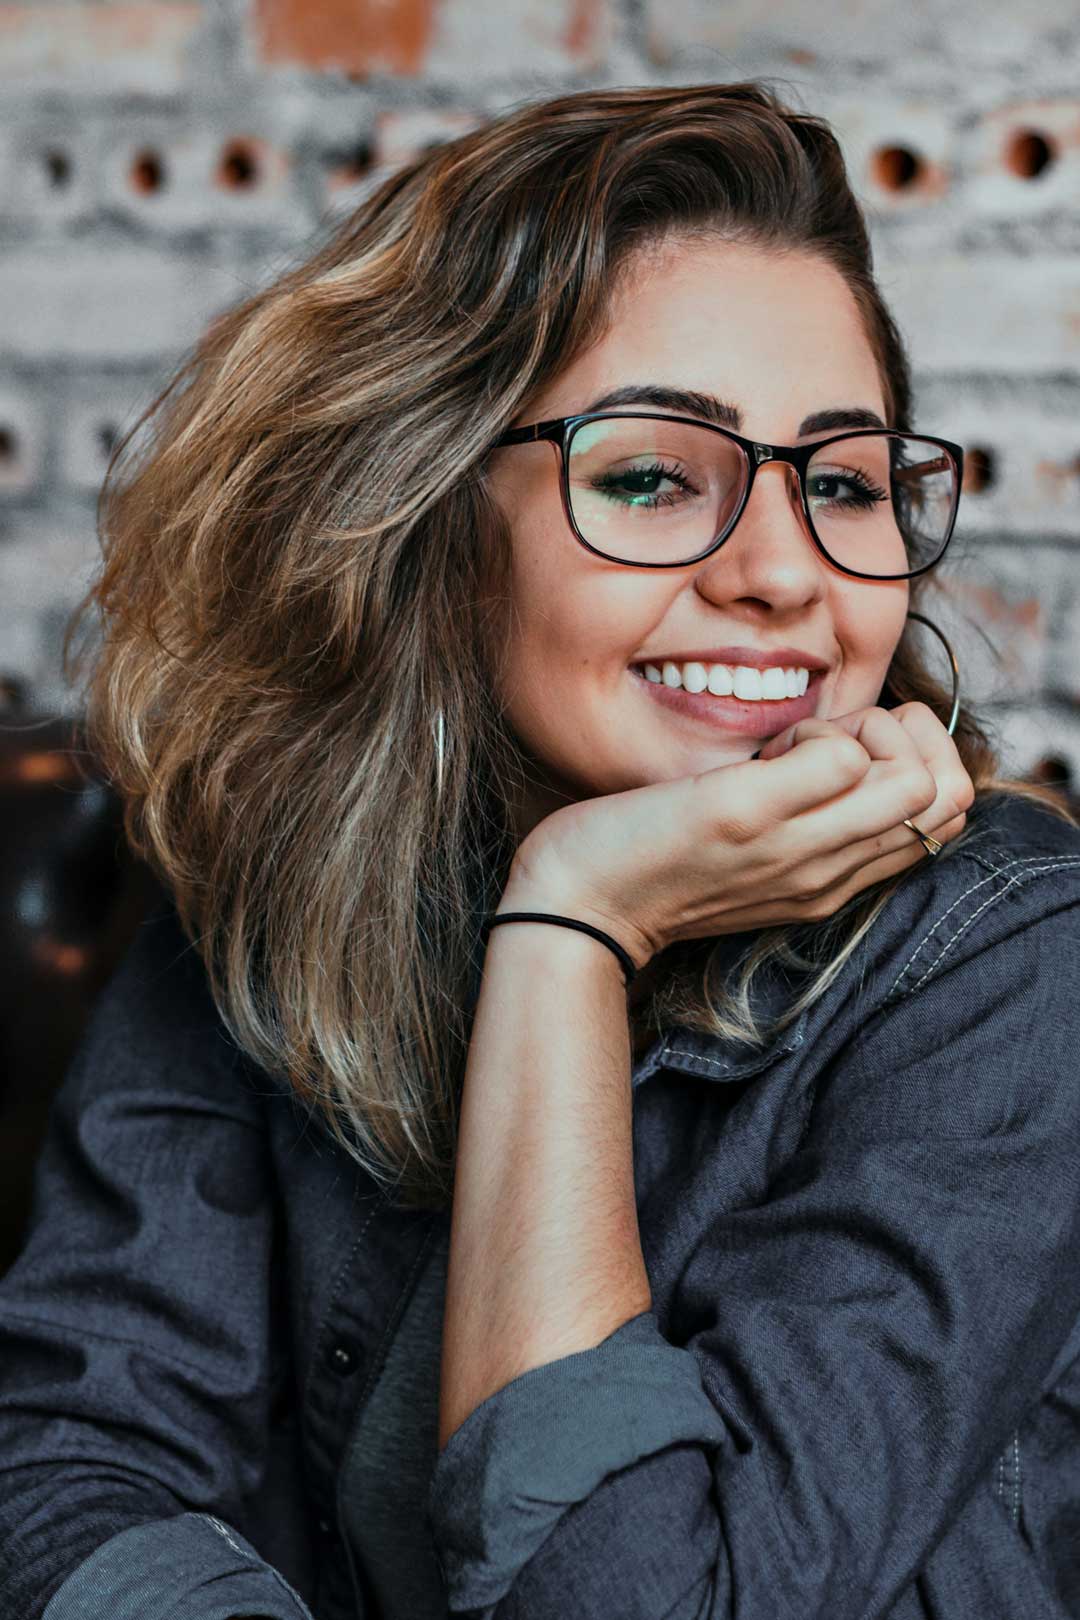 Young lady smiling wearing large eyeglasses frame